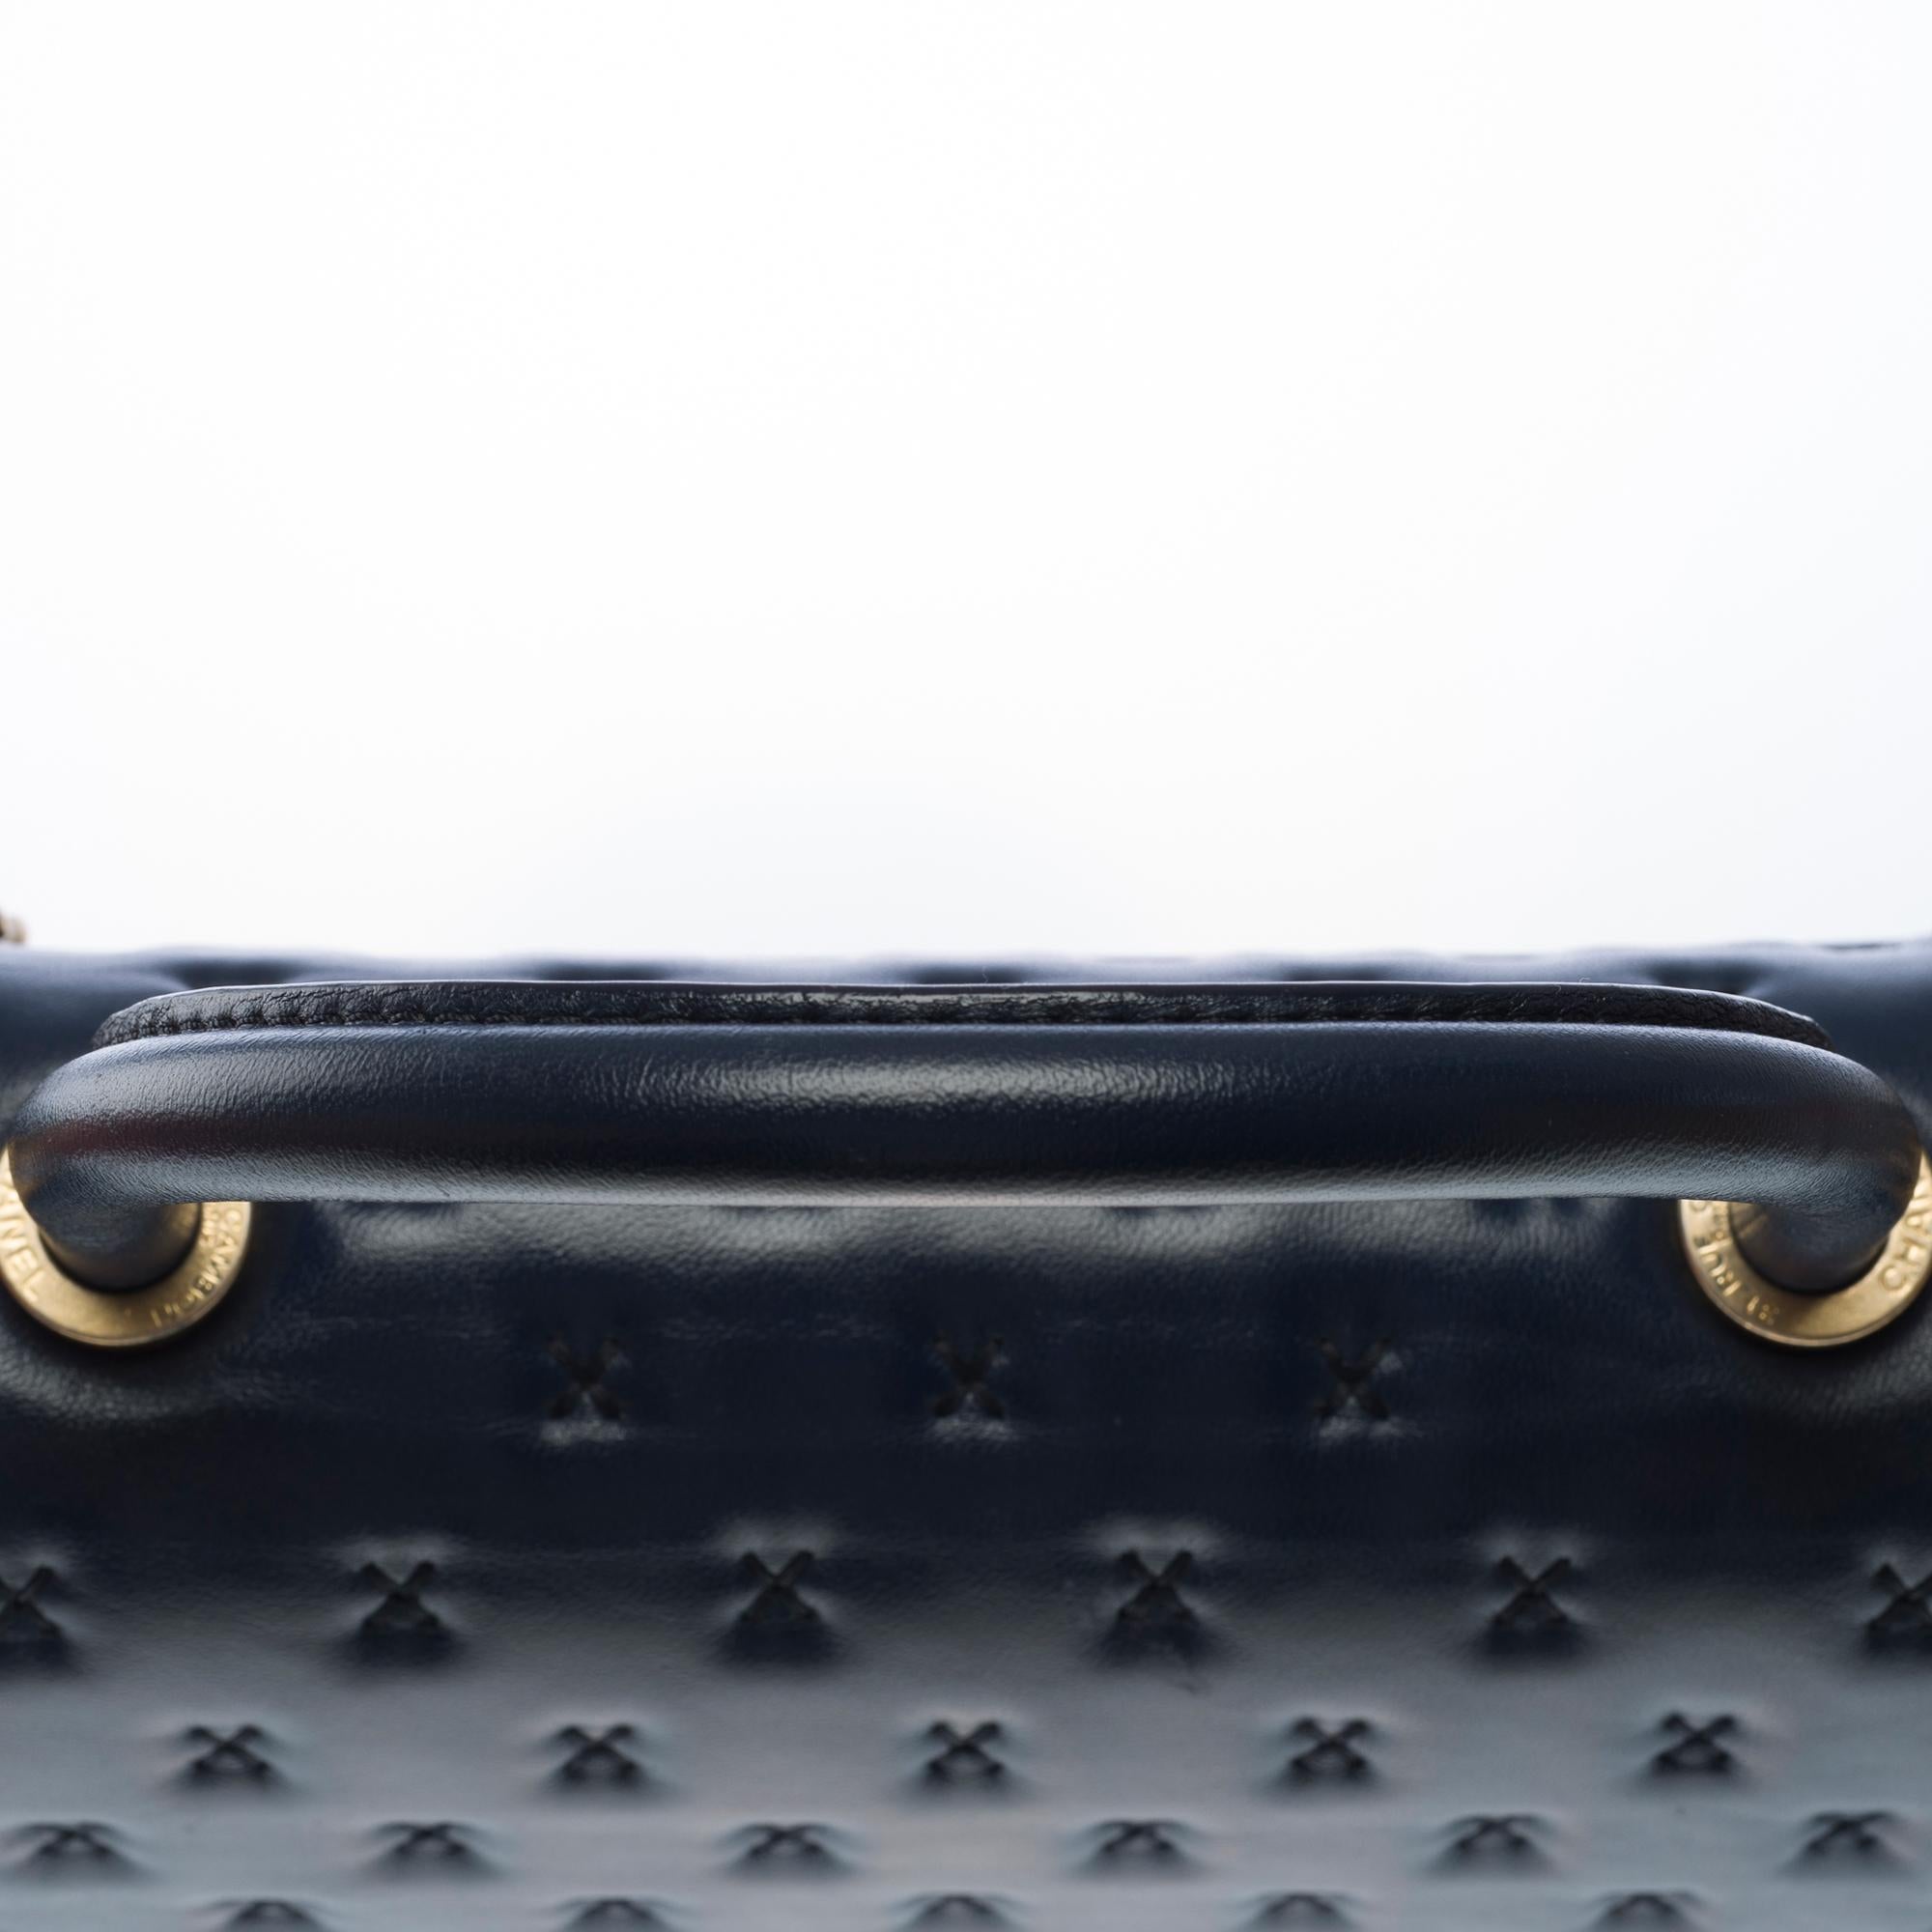 FW2016 Paris-Rome- Chanel Coco handle handbag in Navy blue lambskin leather, GHW 5